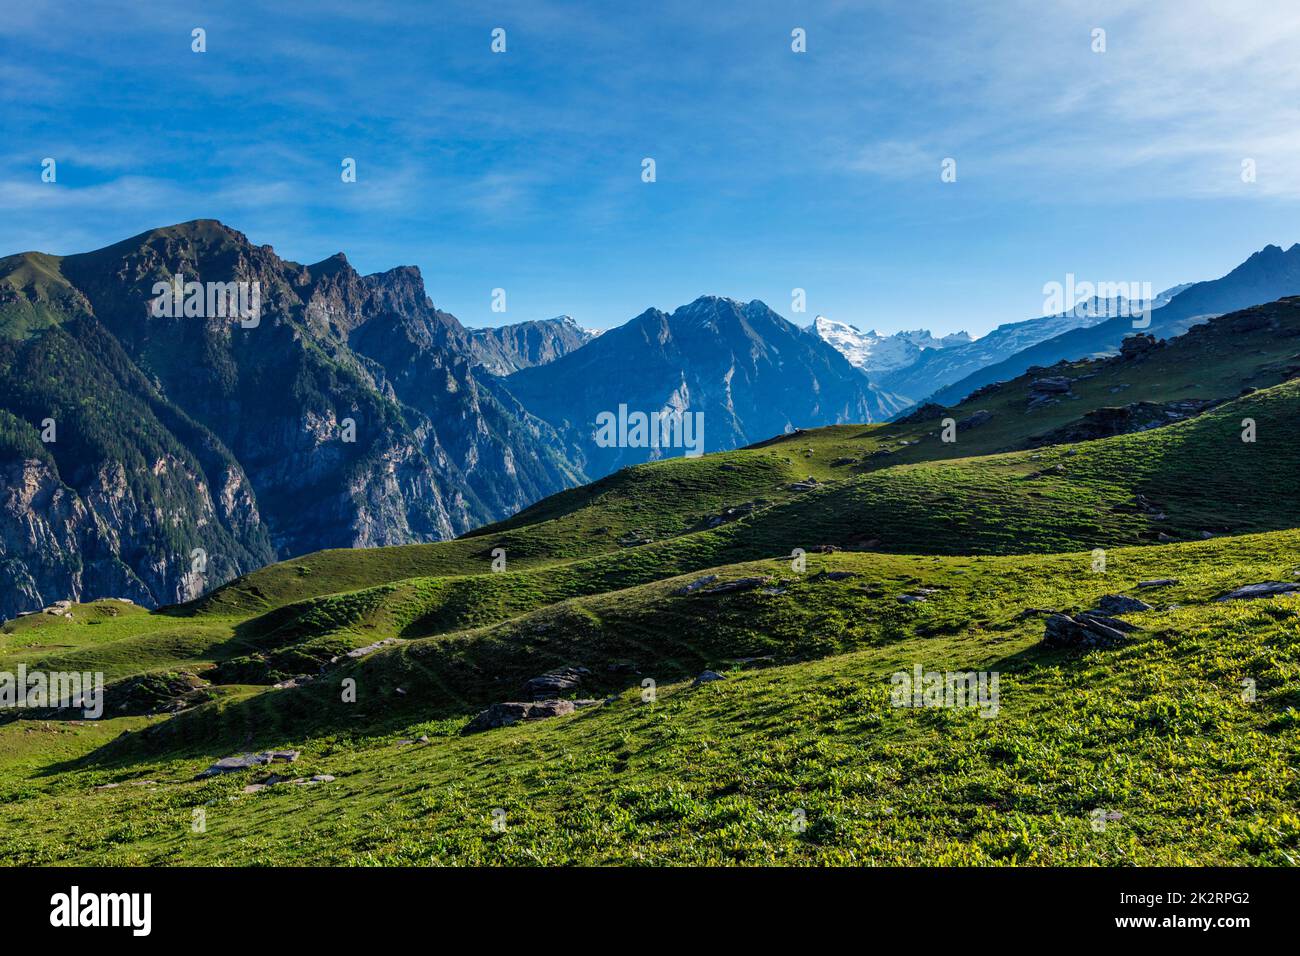 Printemps dans la vallée de Kullu dans les montagnes de l'Himalaya. Himachal Pradesh, Inde Banque D'Images